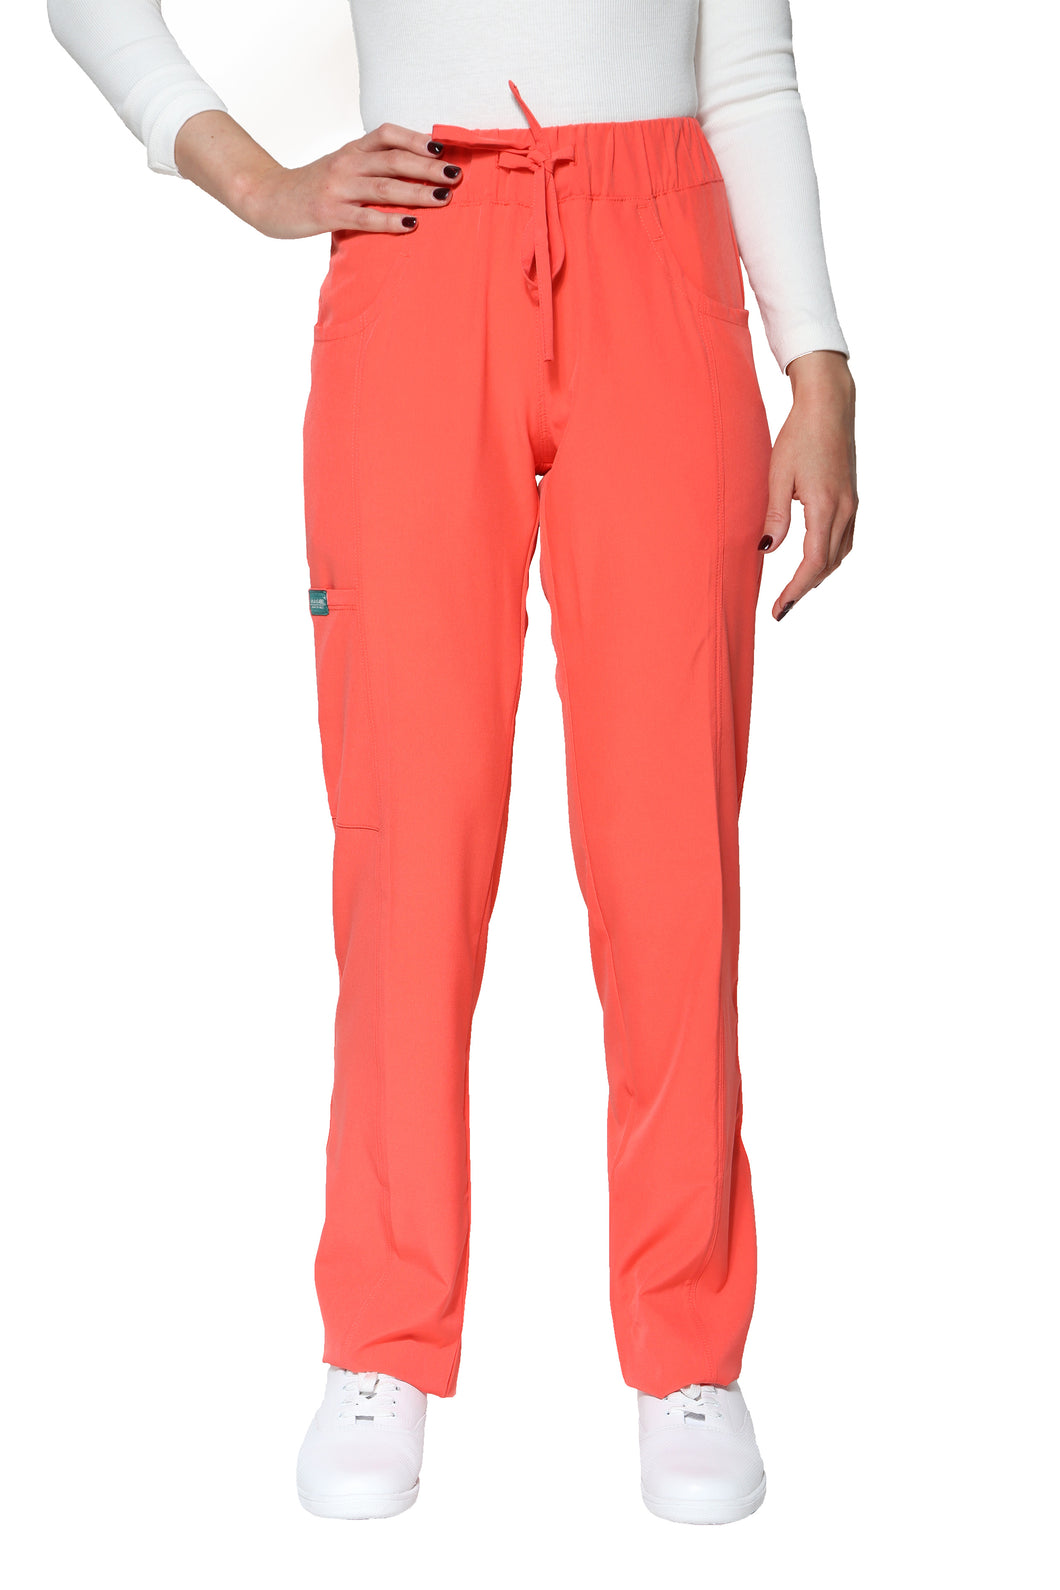 Pantalón Pant EV-120 REPELENTE A FLUIDOS-Color DURAZNO Dama-Ana Isabel Uniformes